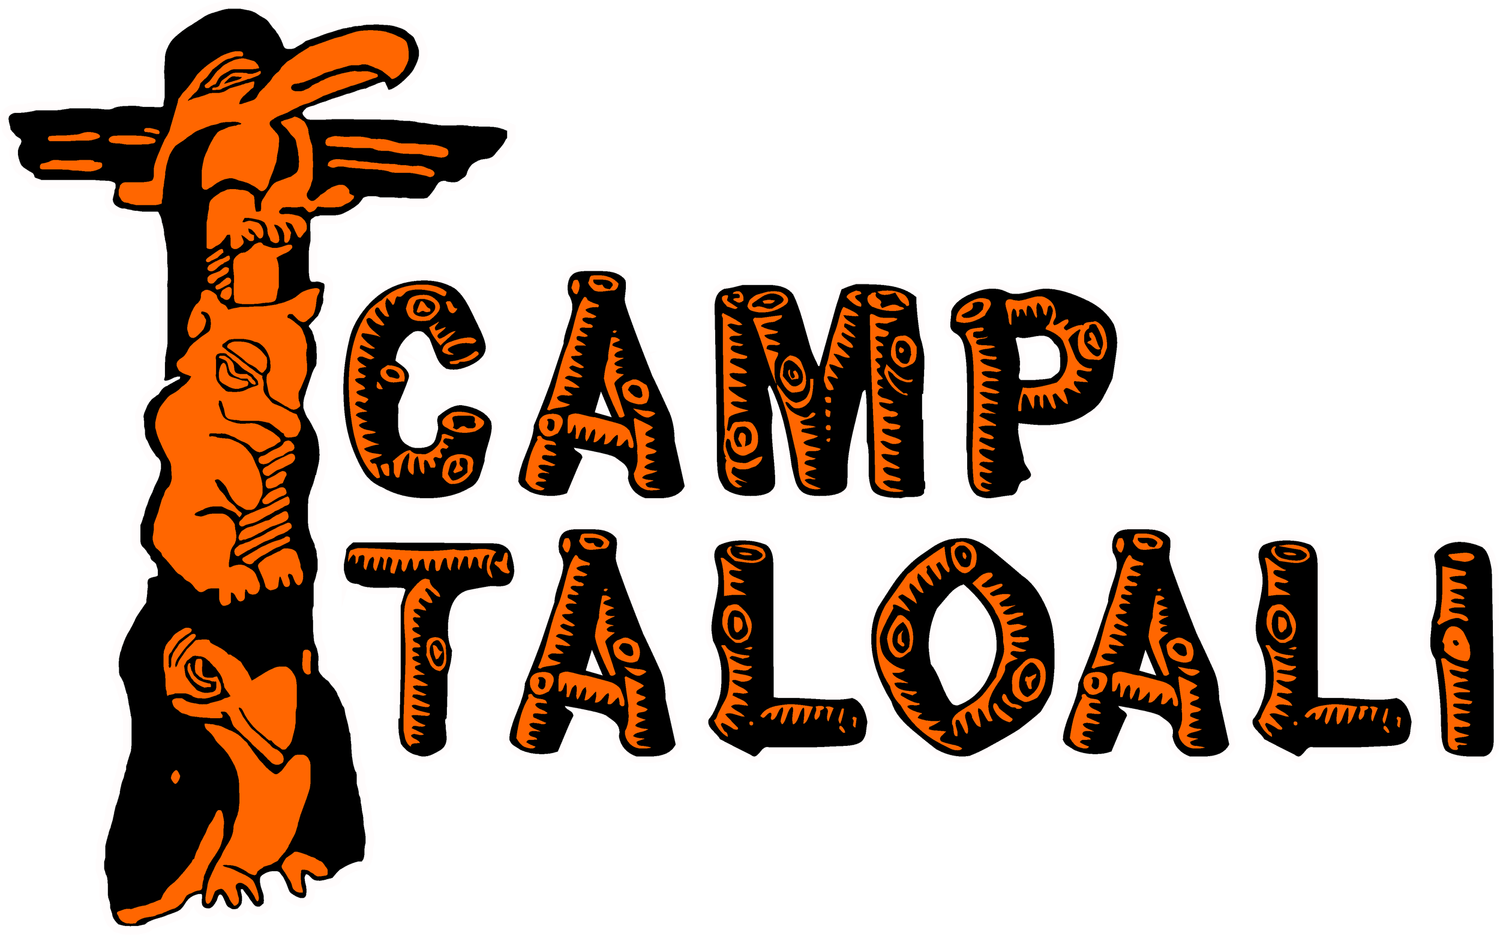 Camp Taloali